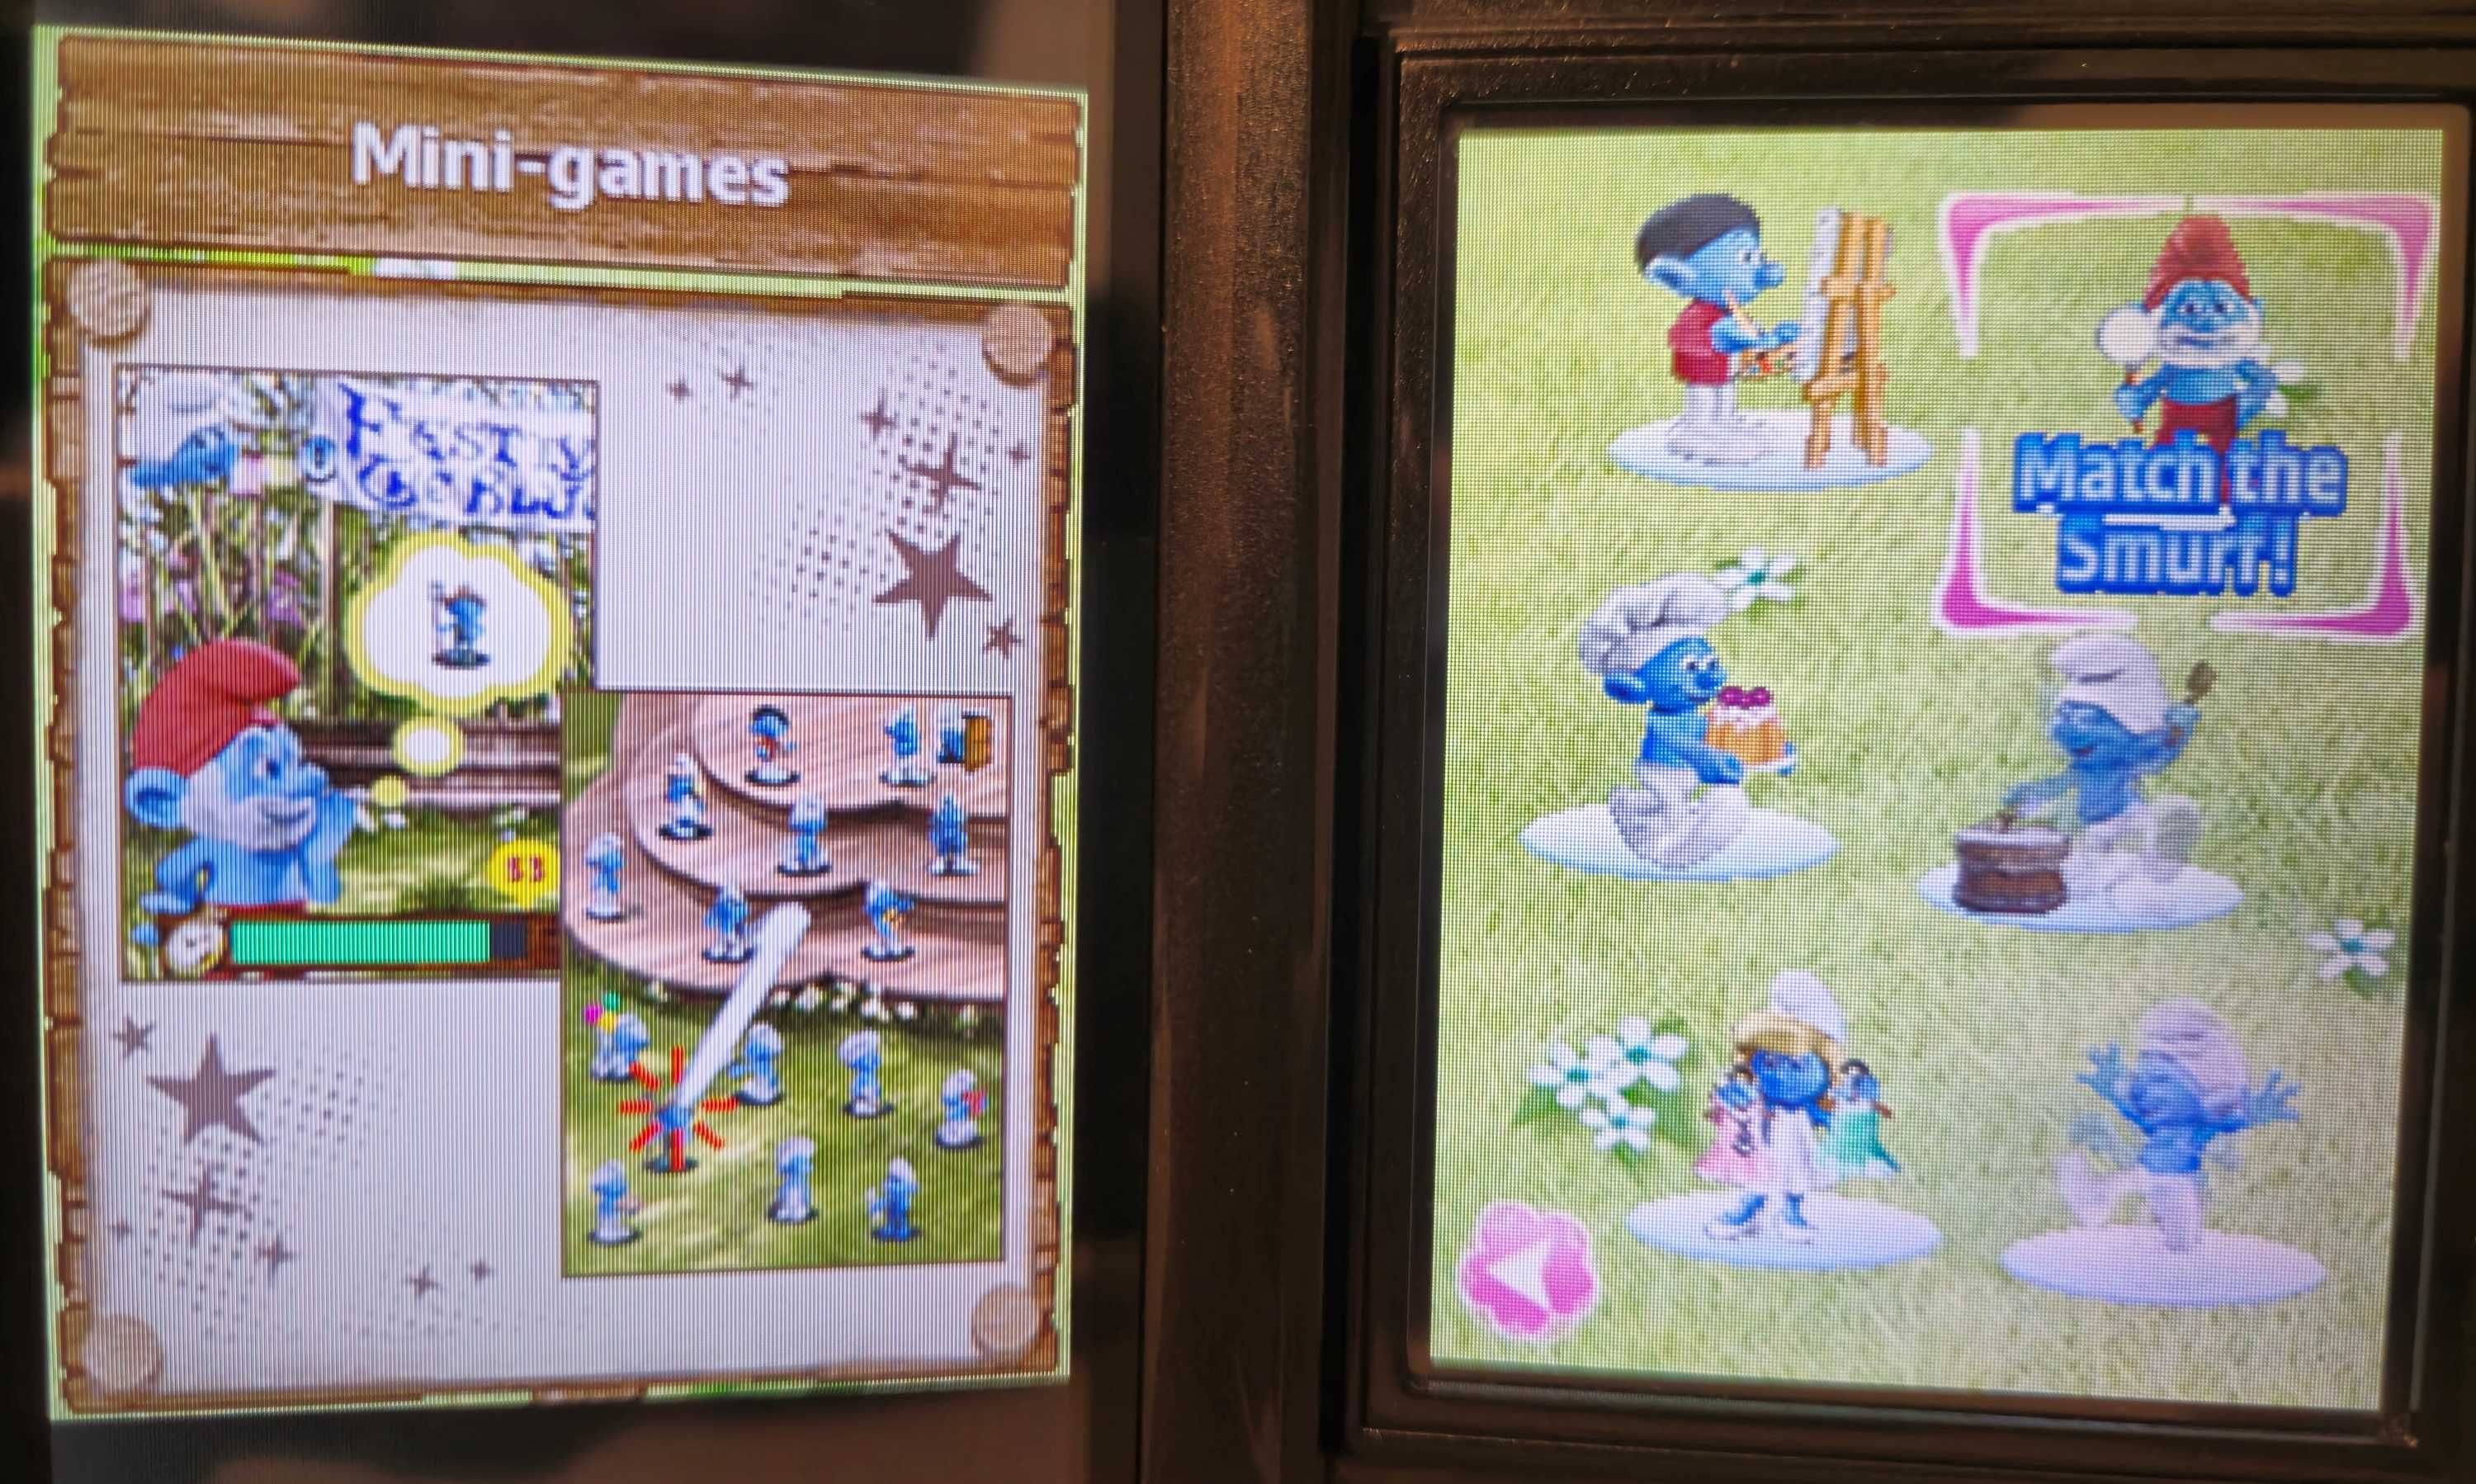 Joc Nintendo DS "The Smurfs" - la cutie